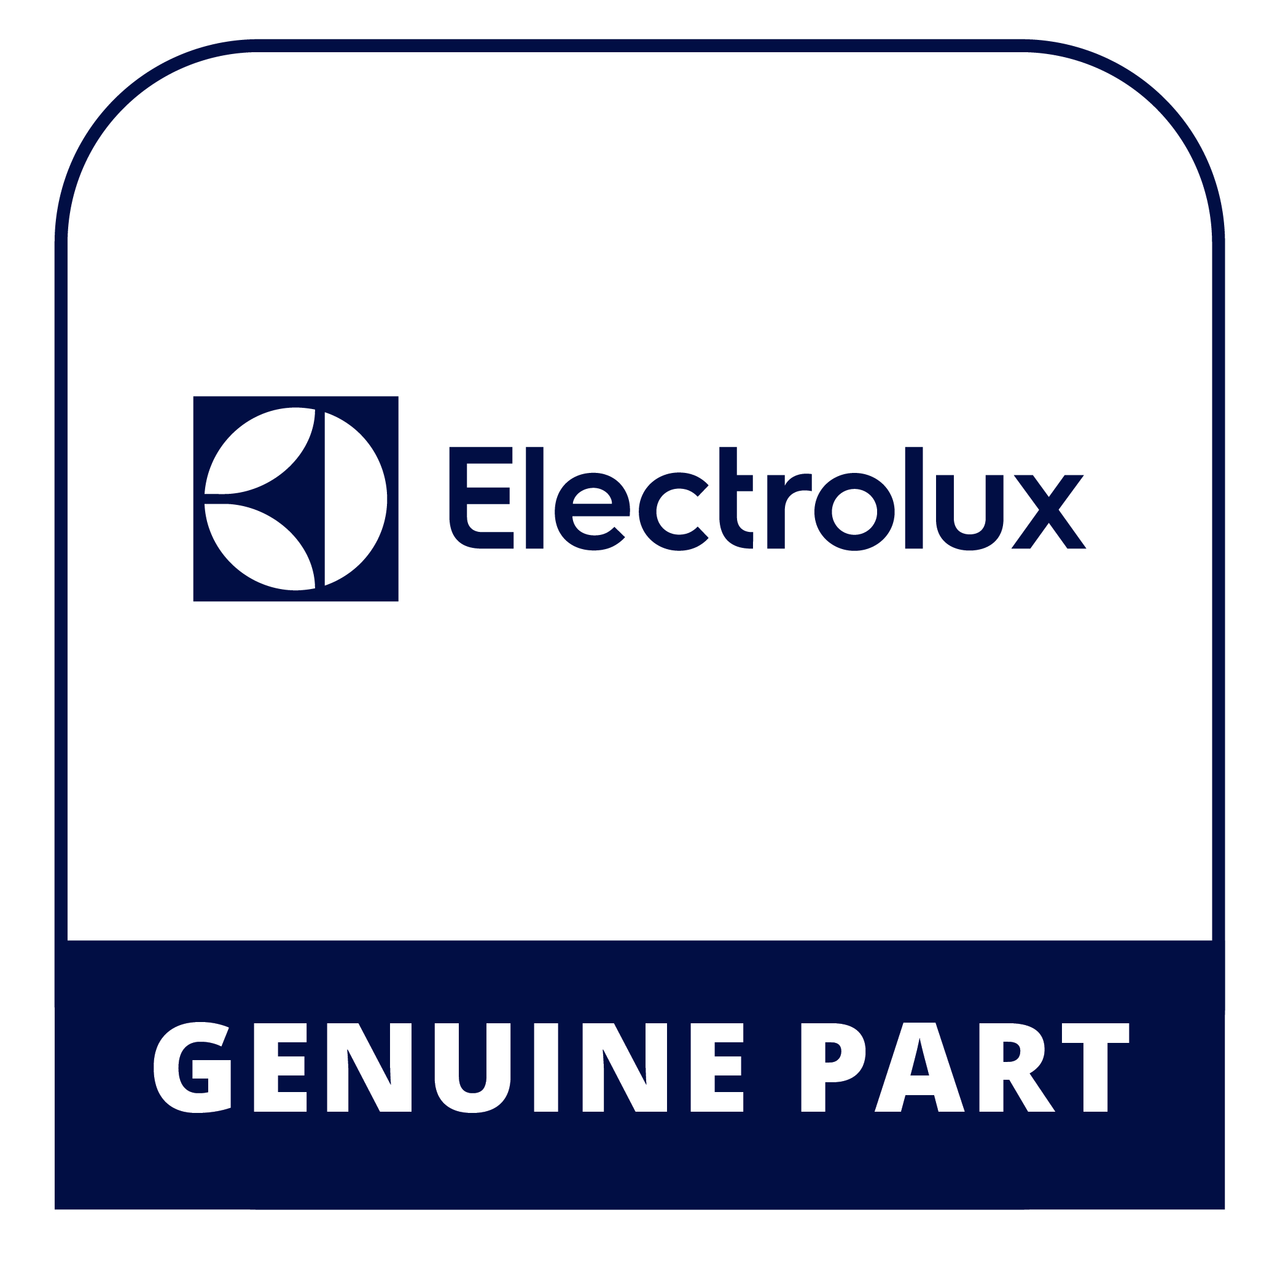 Frigidaire - Electrolux 5300126809 - Panel - Genuine Electrolux Part